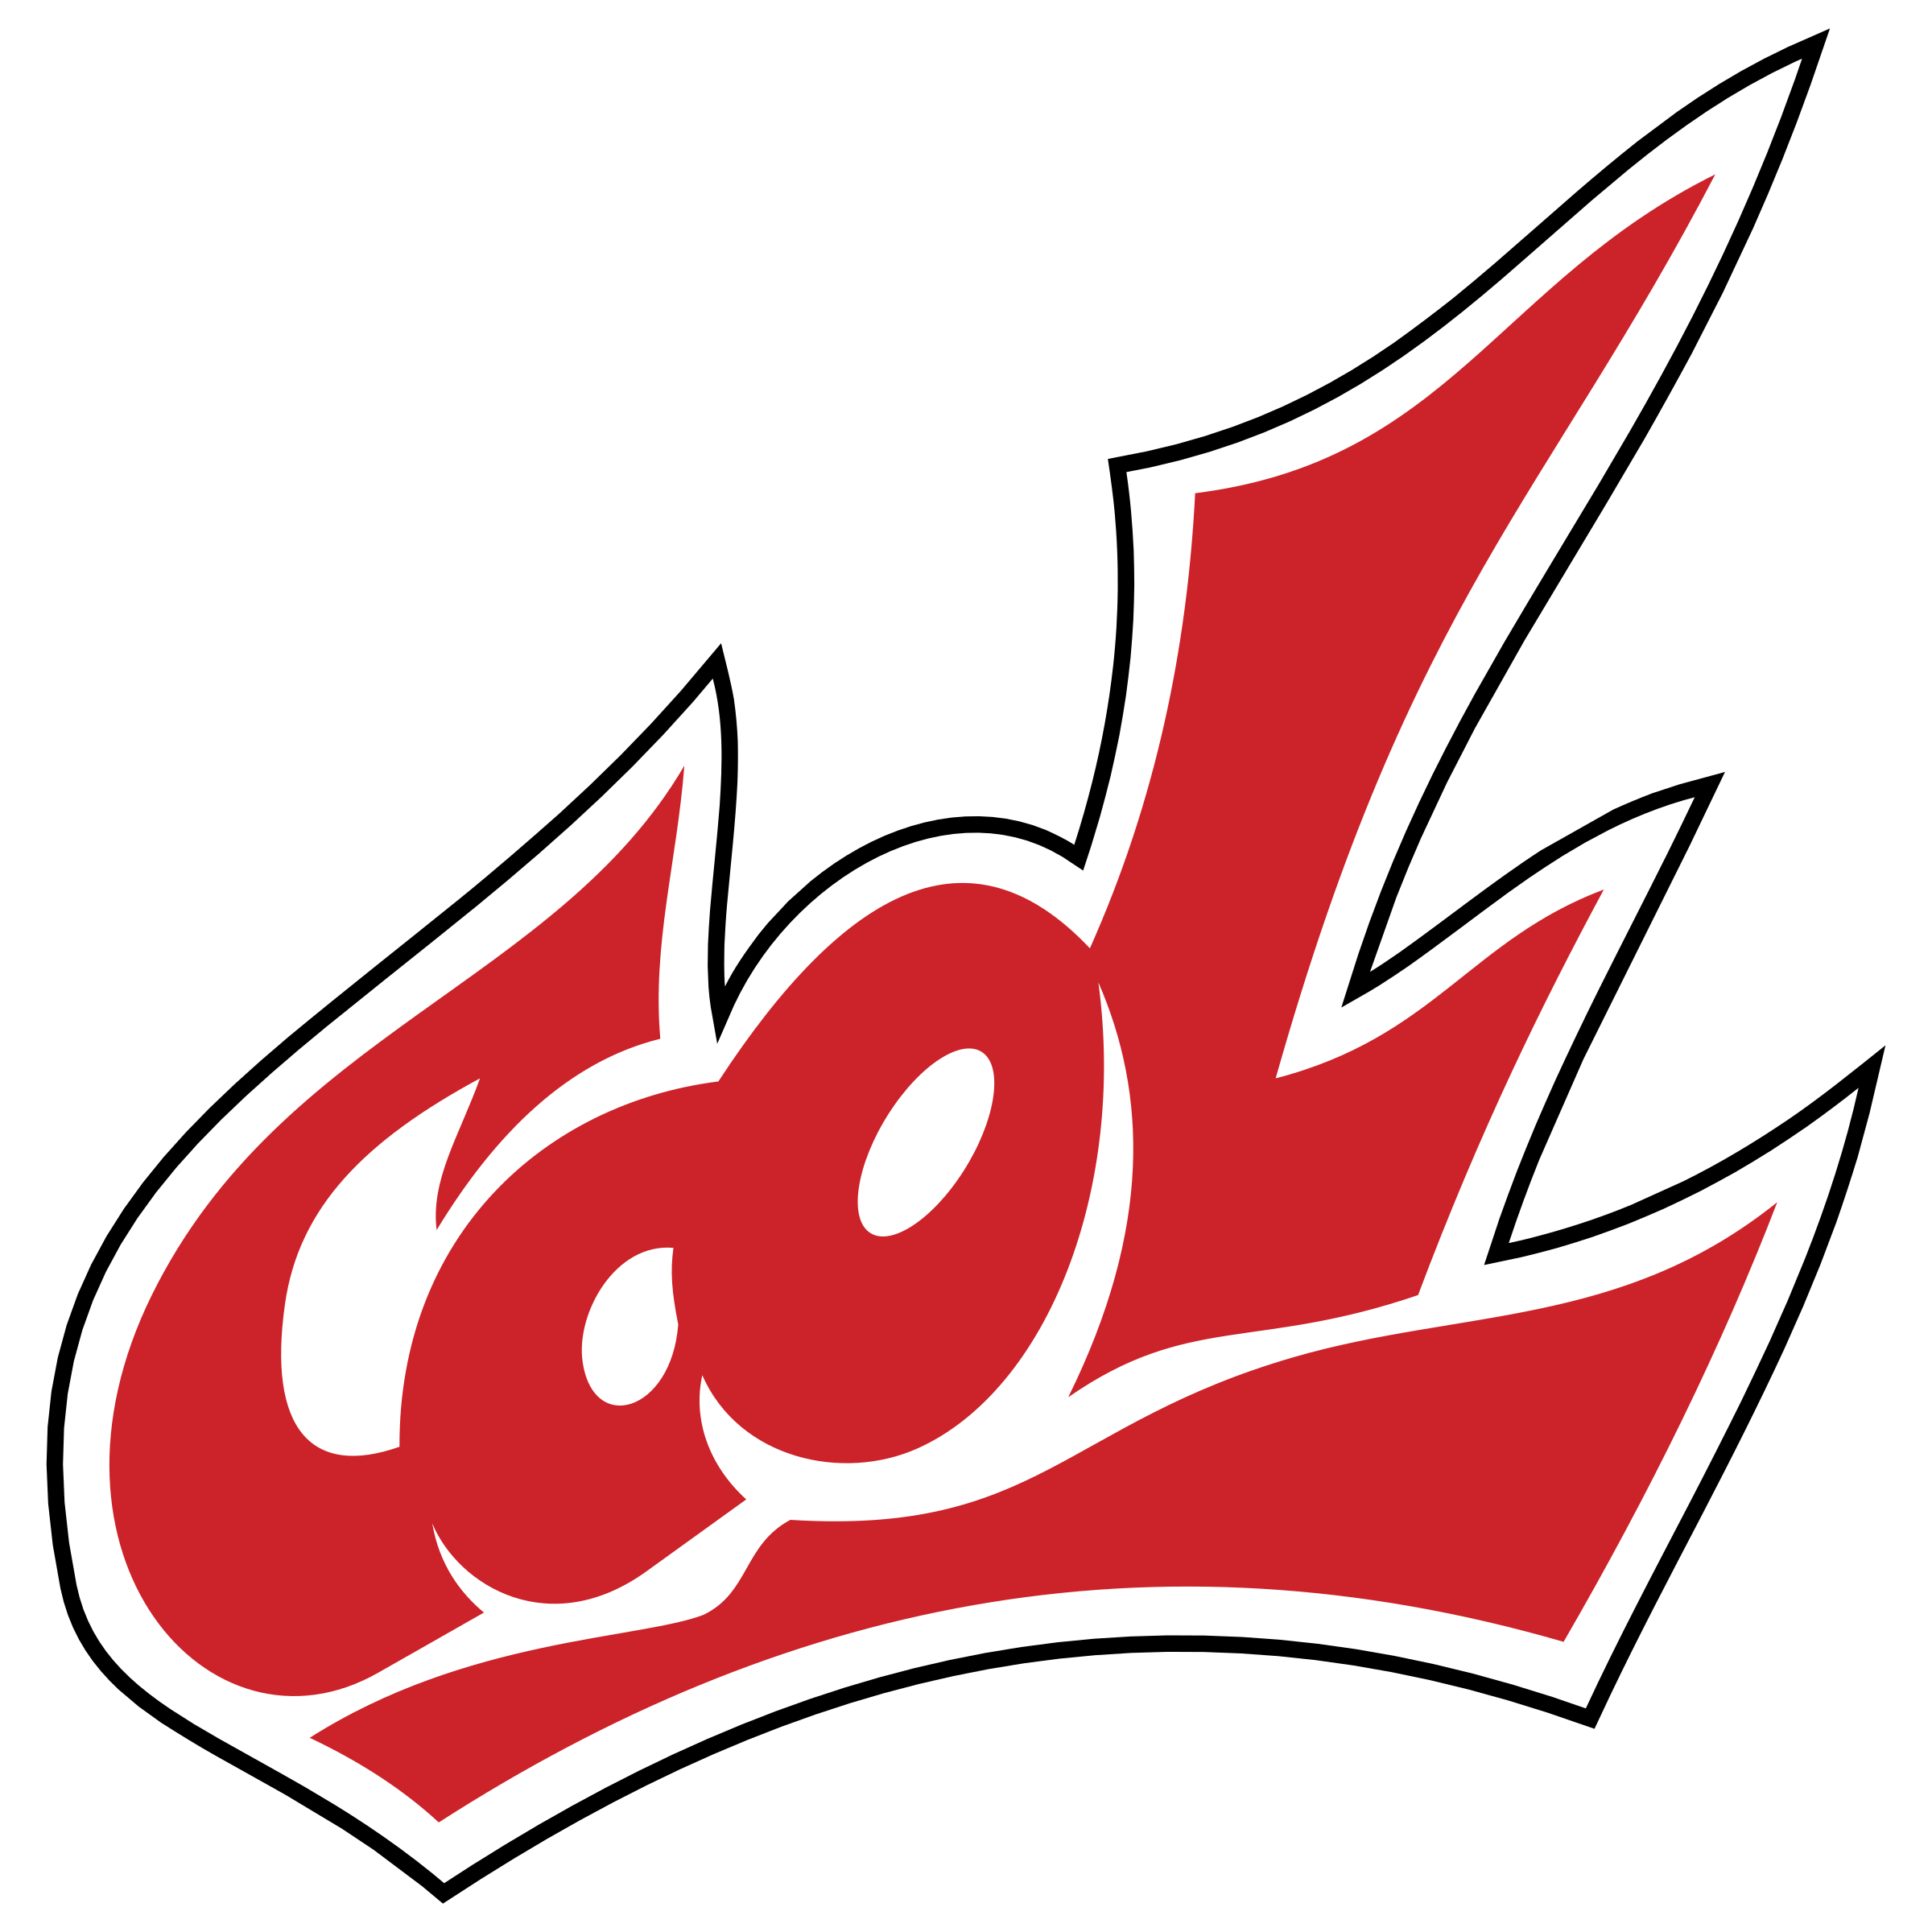 Cool Transparent Logo - Cool Logo PNG Transparent & SVG Vector - Freebie Supply